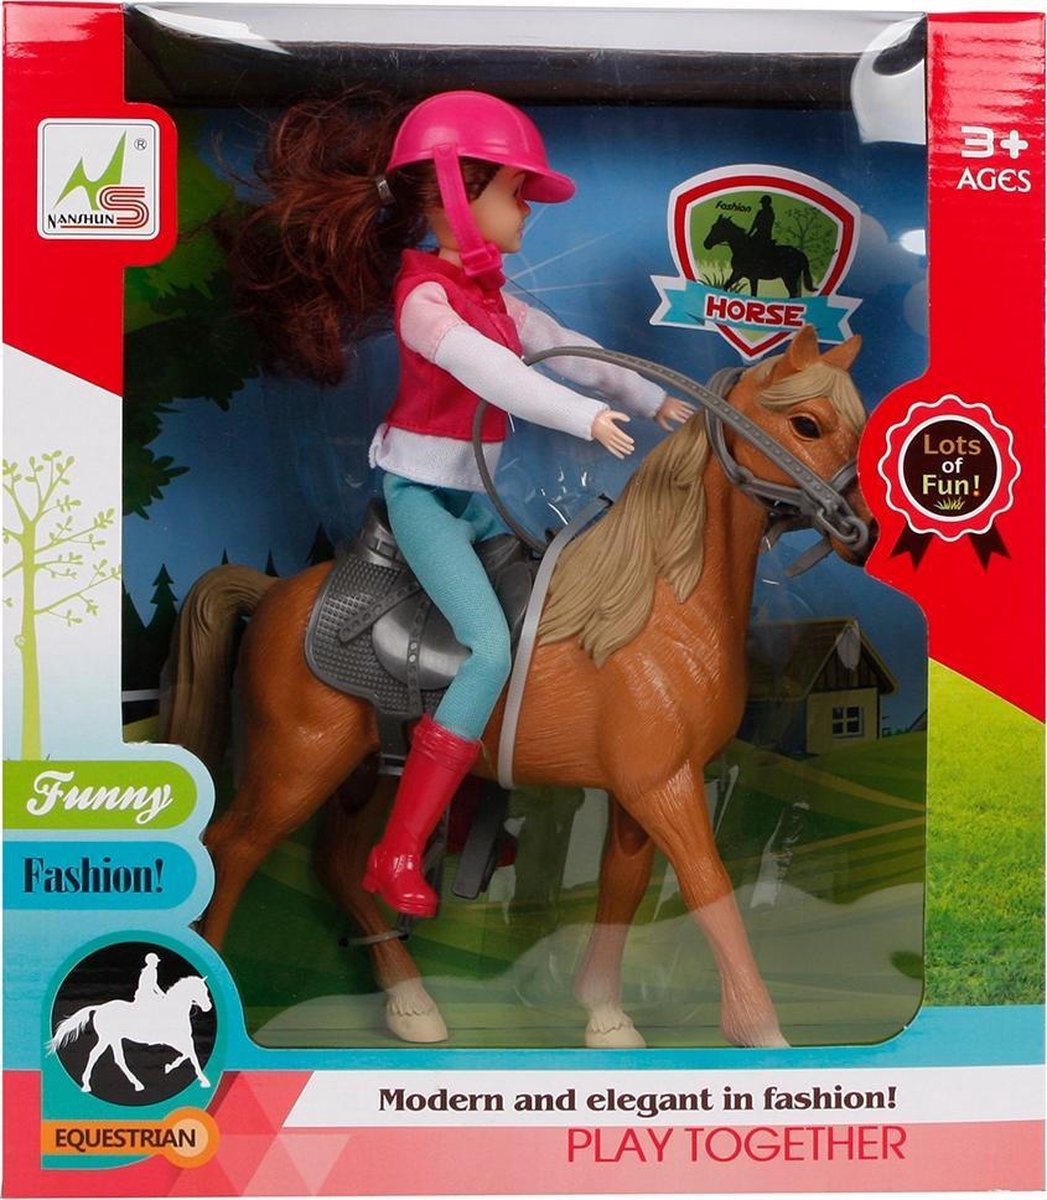 Toys Amsterdam speelset Paard met ruiter 21 cm roze/bruin 4 delig